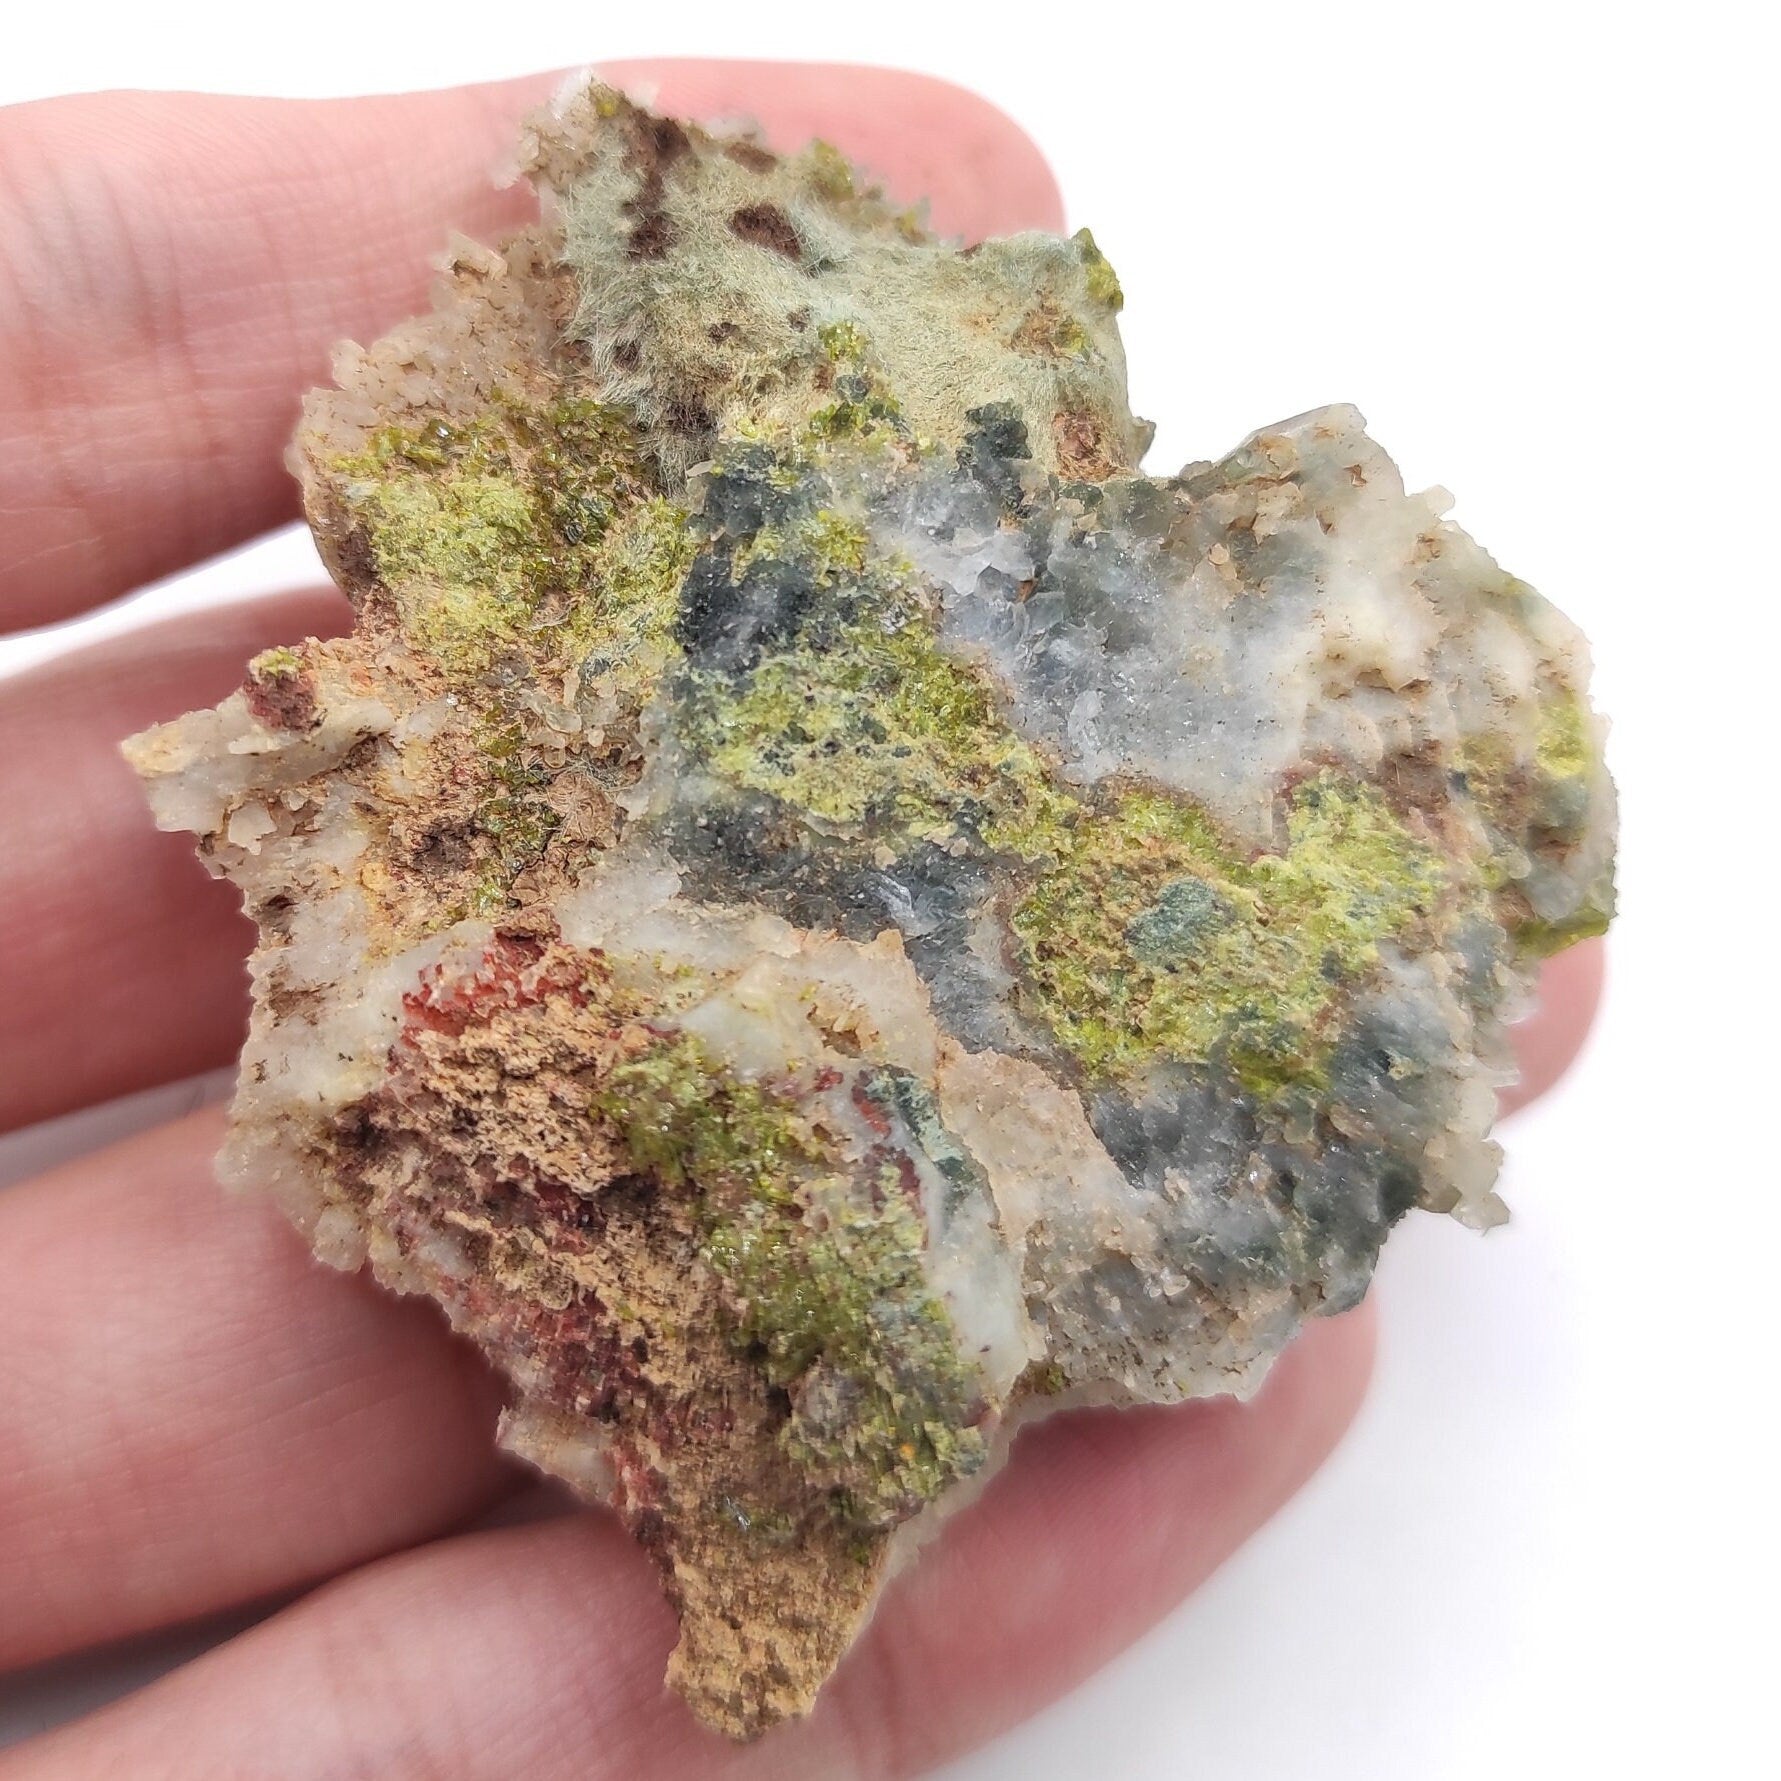 39g Epidote with Quartz - Imilchil, Morocco - Green Epidote Crystal Cluster - Raw Mineral Specimen - Green Epidote and Quartz Crystal